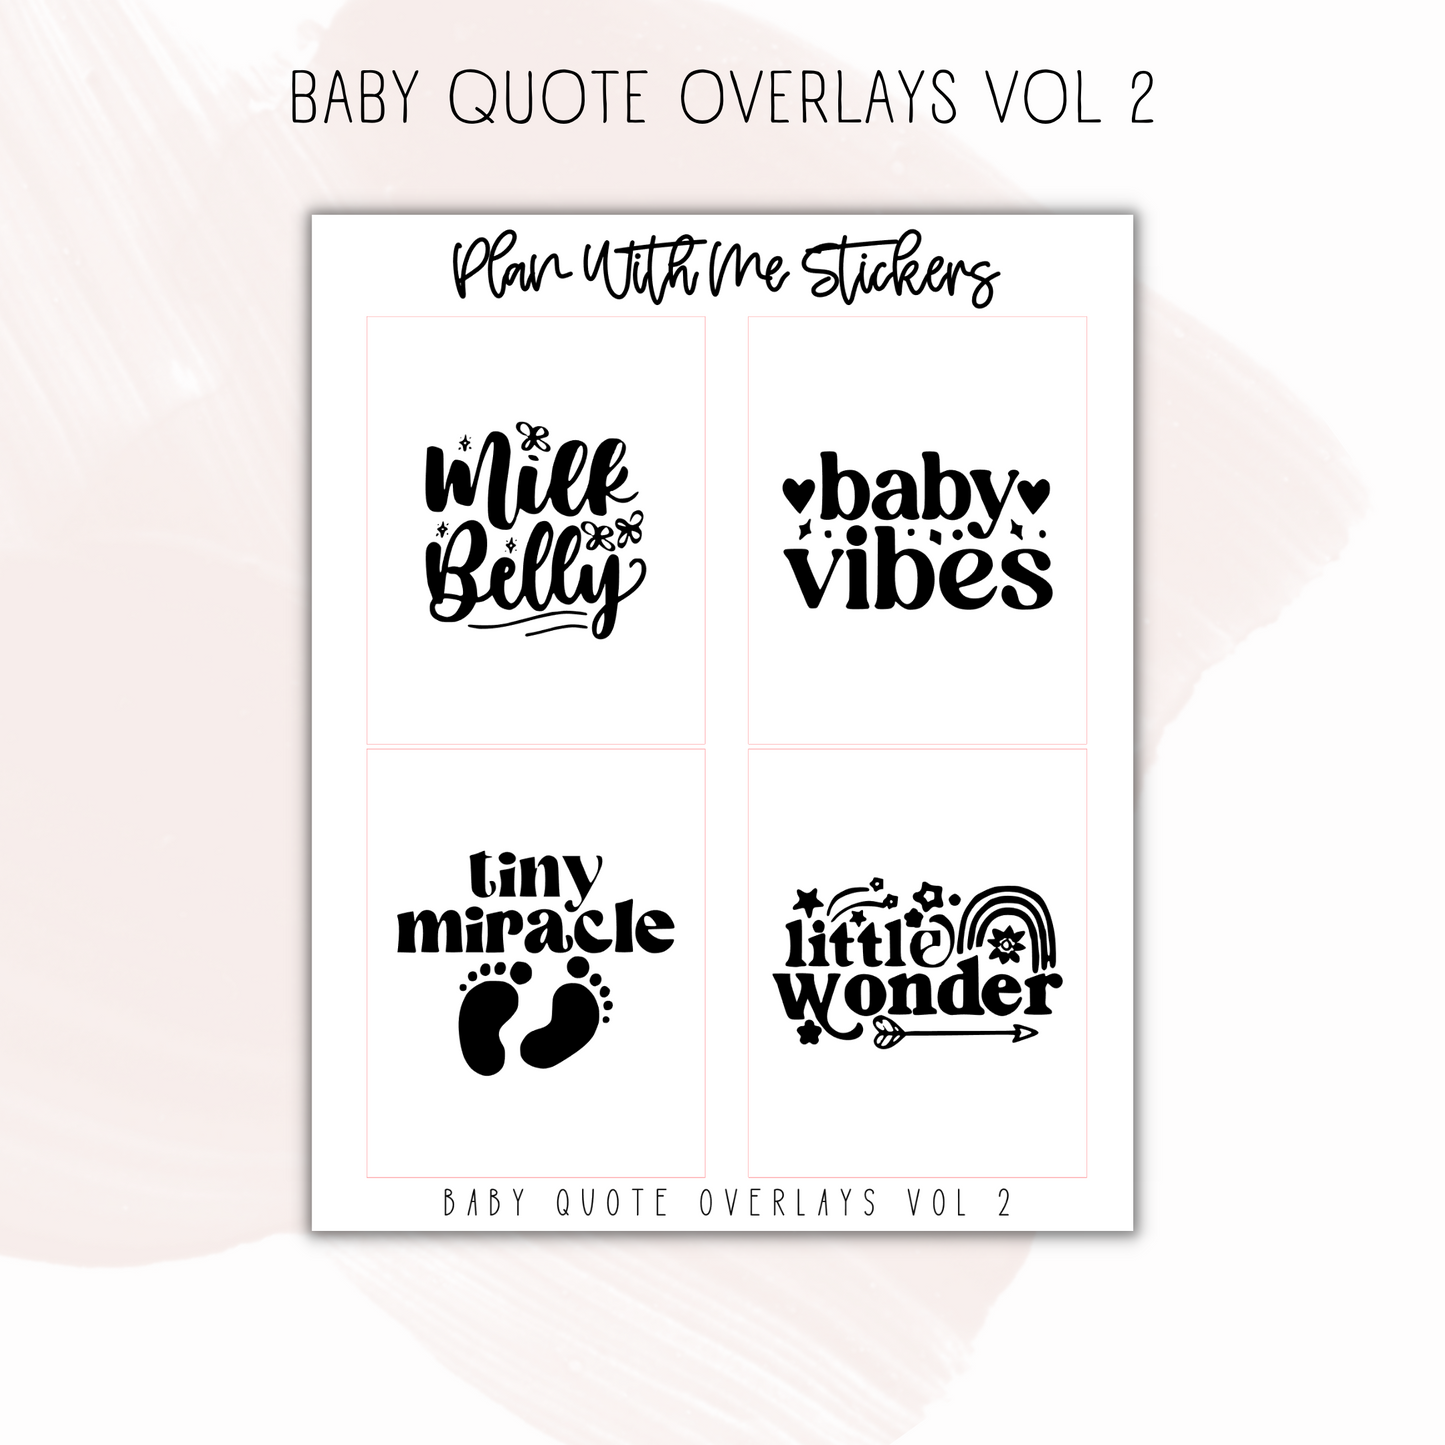 Baby Quote Overlays Vol 2